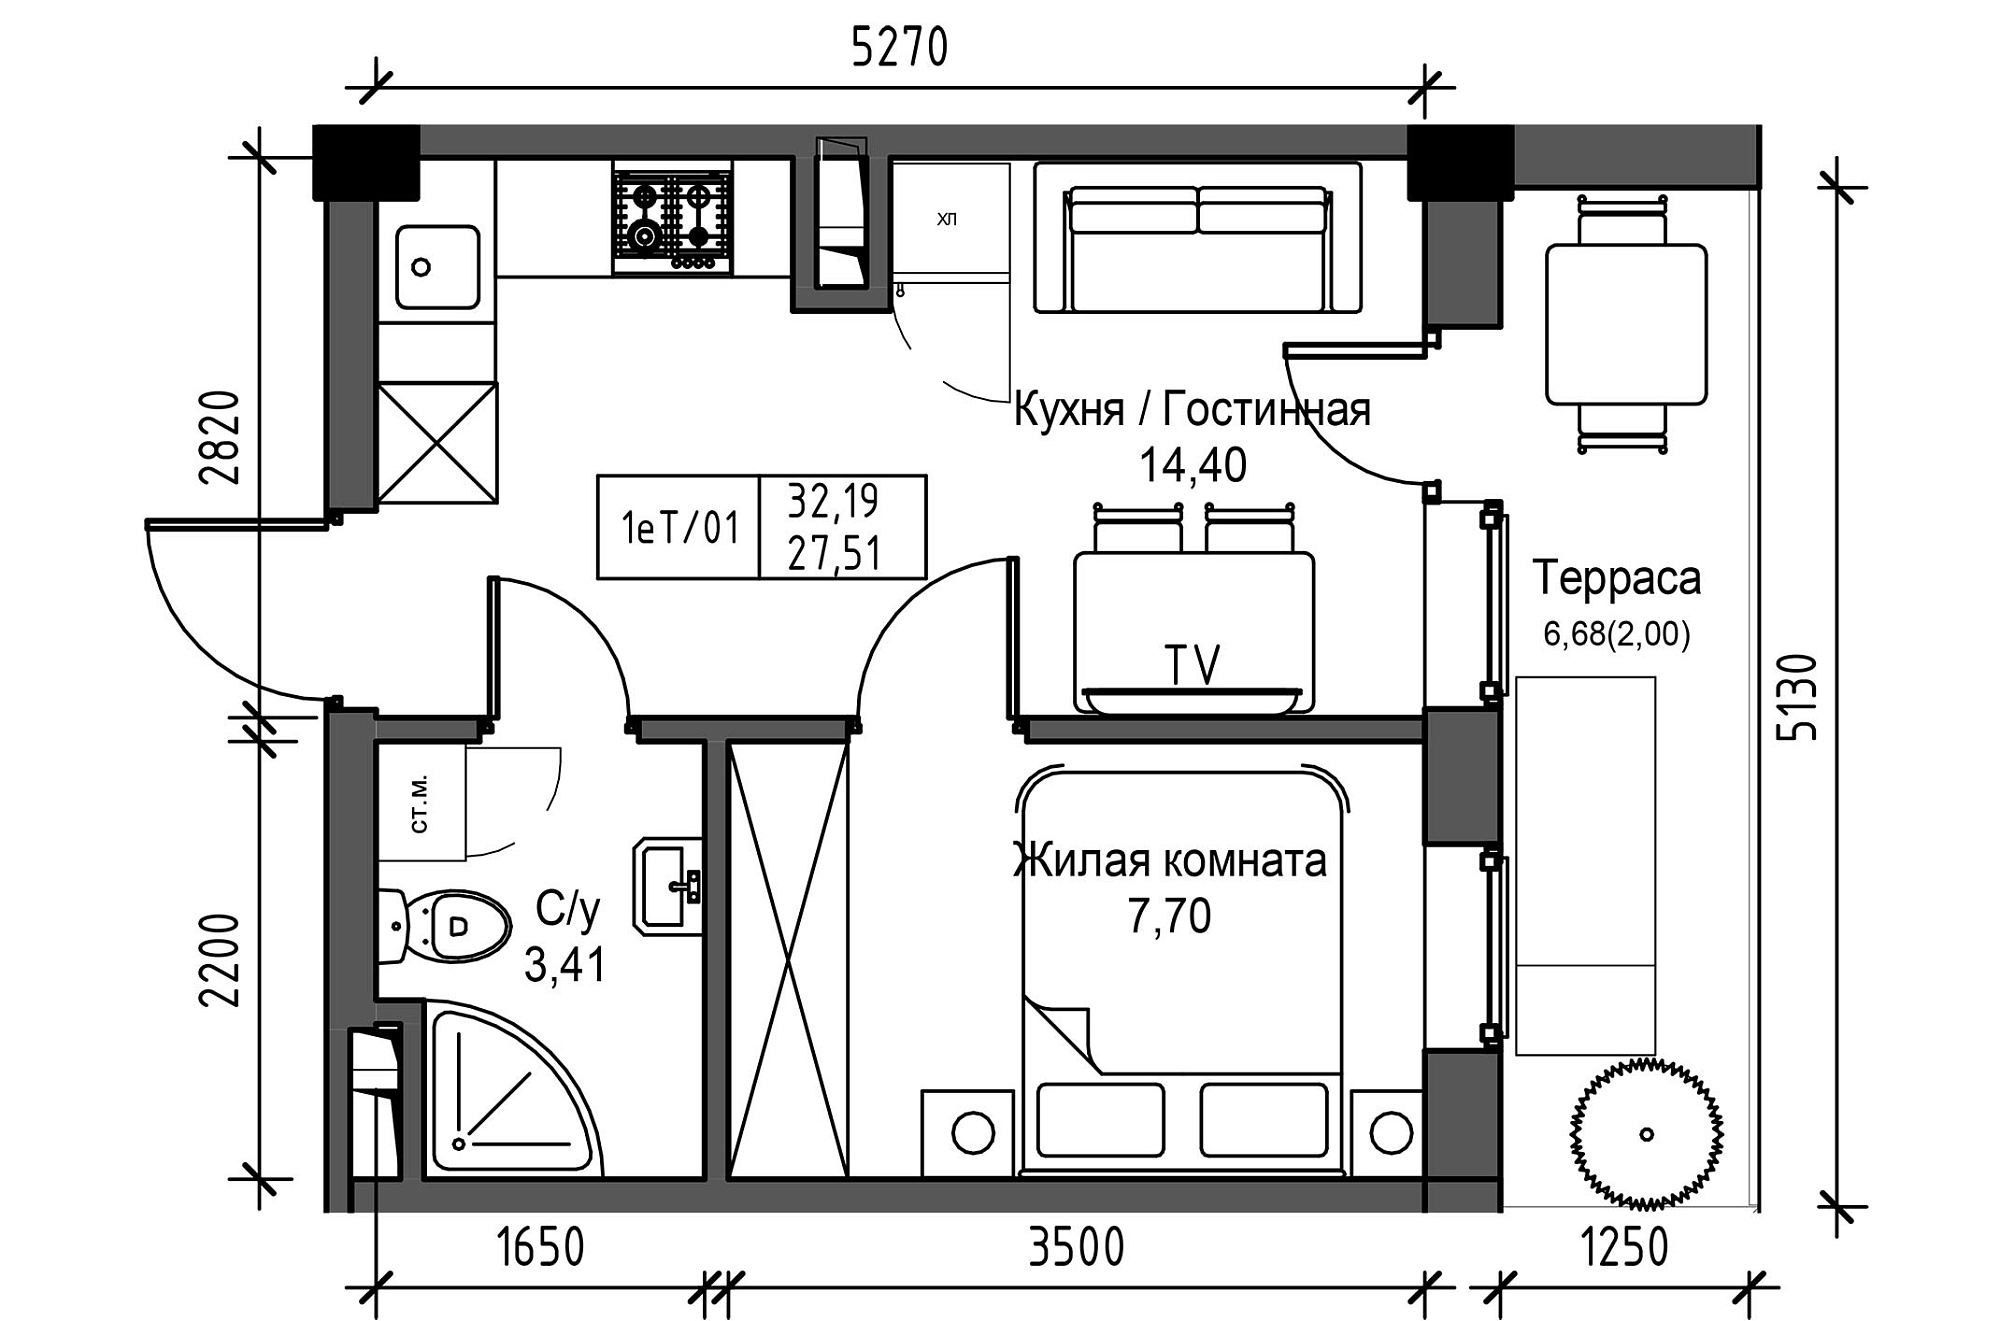 Planning 1-rm flats area 27.51m2, UM-003-06/0051.